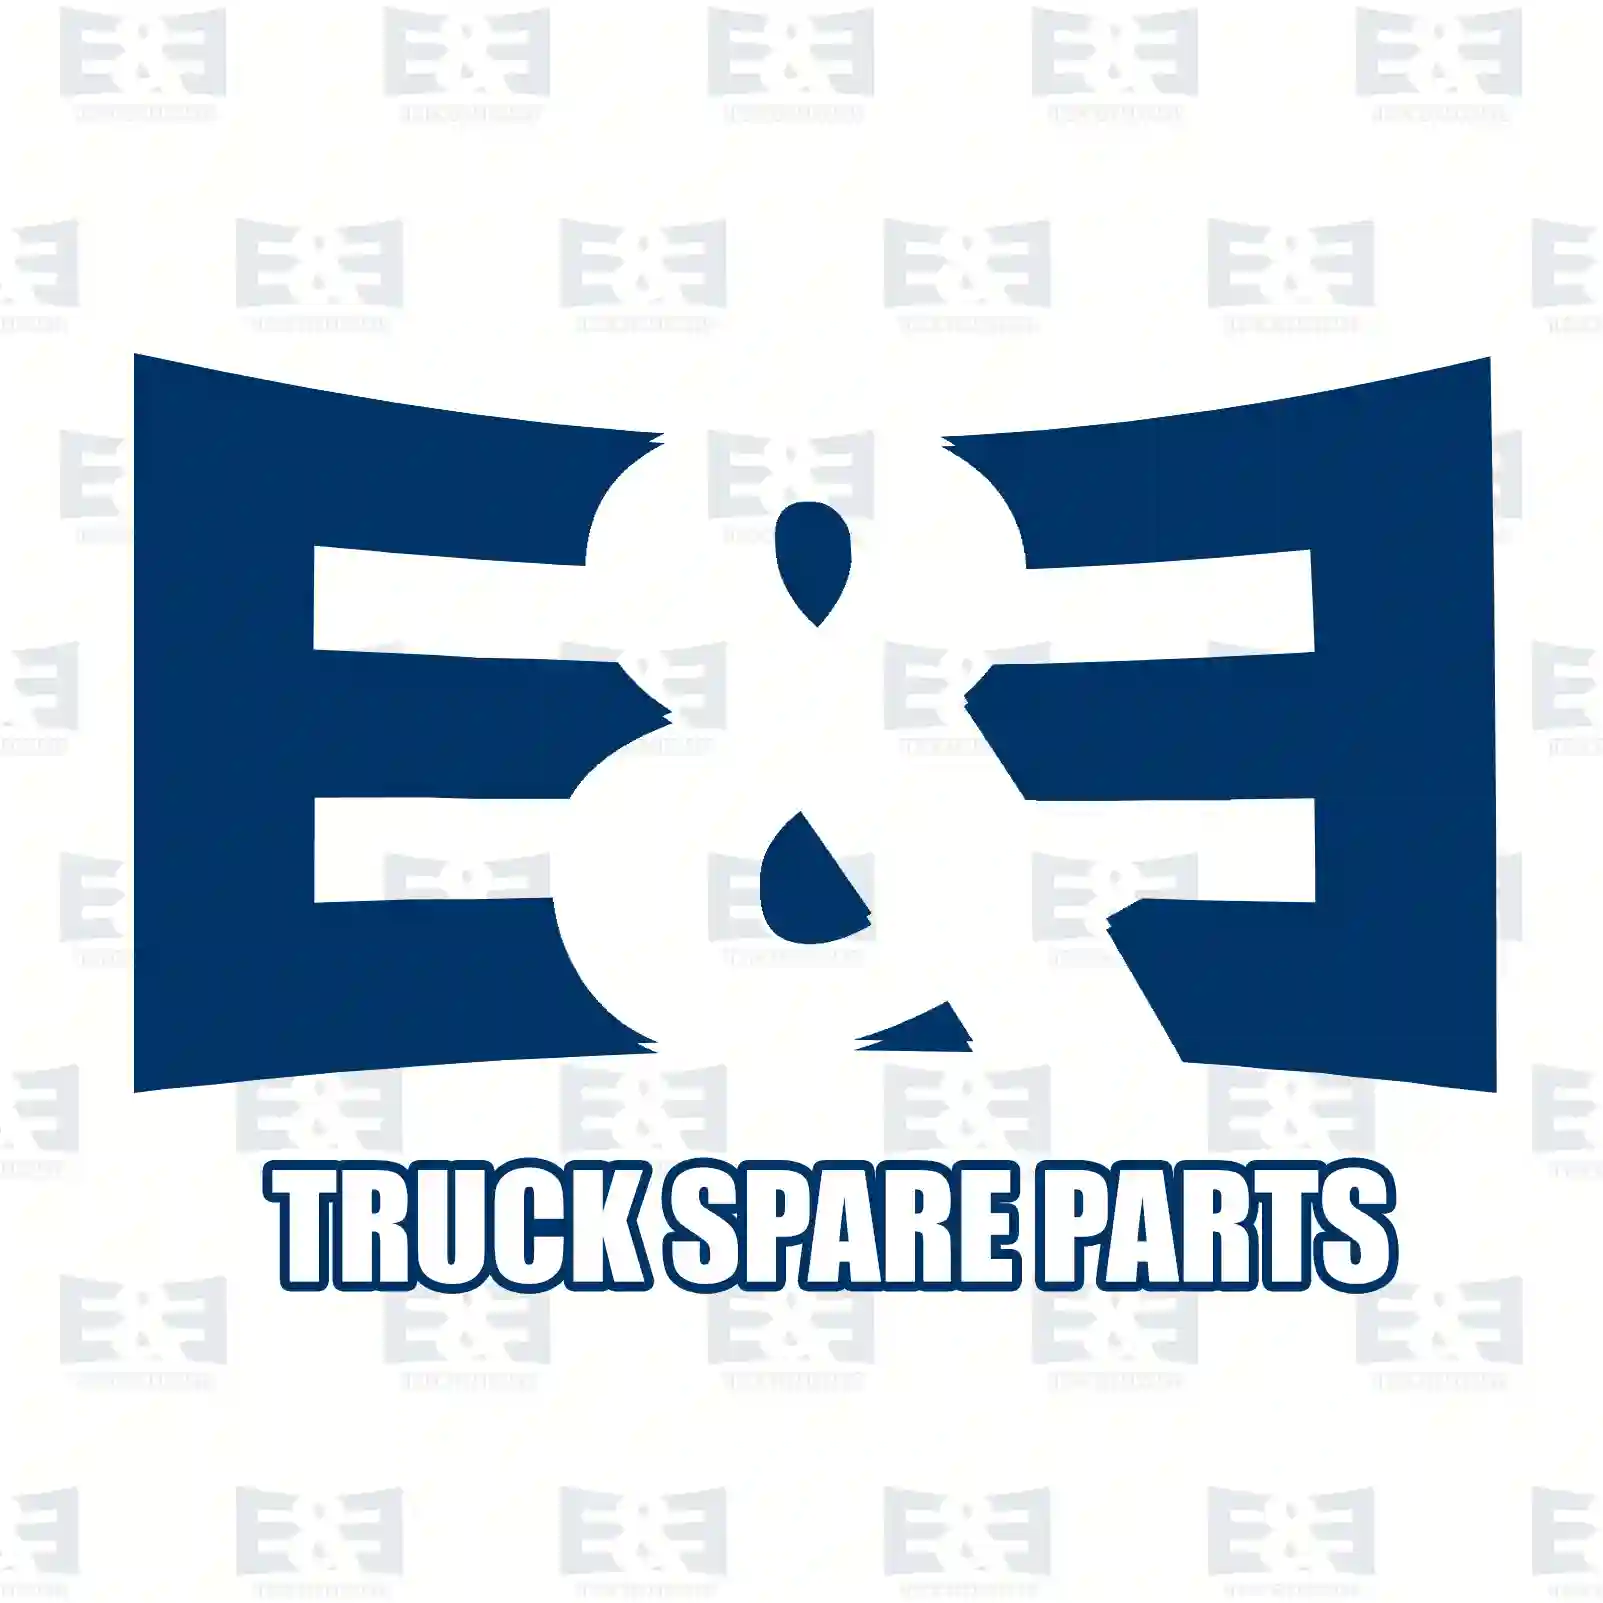 Ball bearing, 2E2202005, 6019810027, 6019810127, 6019810227 ||  2E2202005 E&E Truck Spare Parts | Truck Spare Parts, Auotomotive Spare Parts Ball bearing, 2E2202005, 6019810027, 6019810127, 6019810227 ||  2E2202005 E&E Truck Spare Parts | Truck Spare Parts, Auotomotive Spare Parts